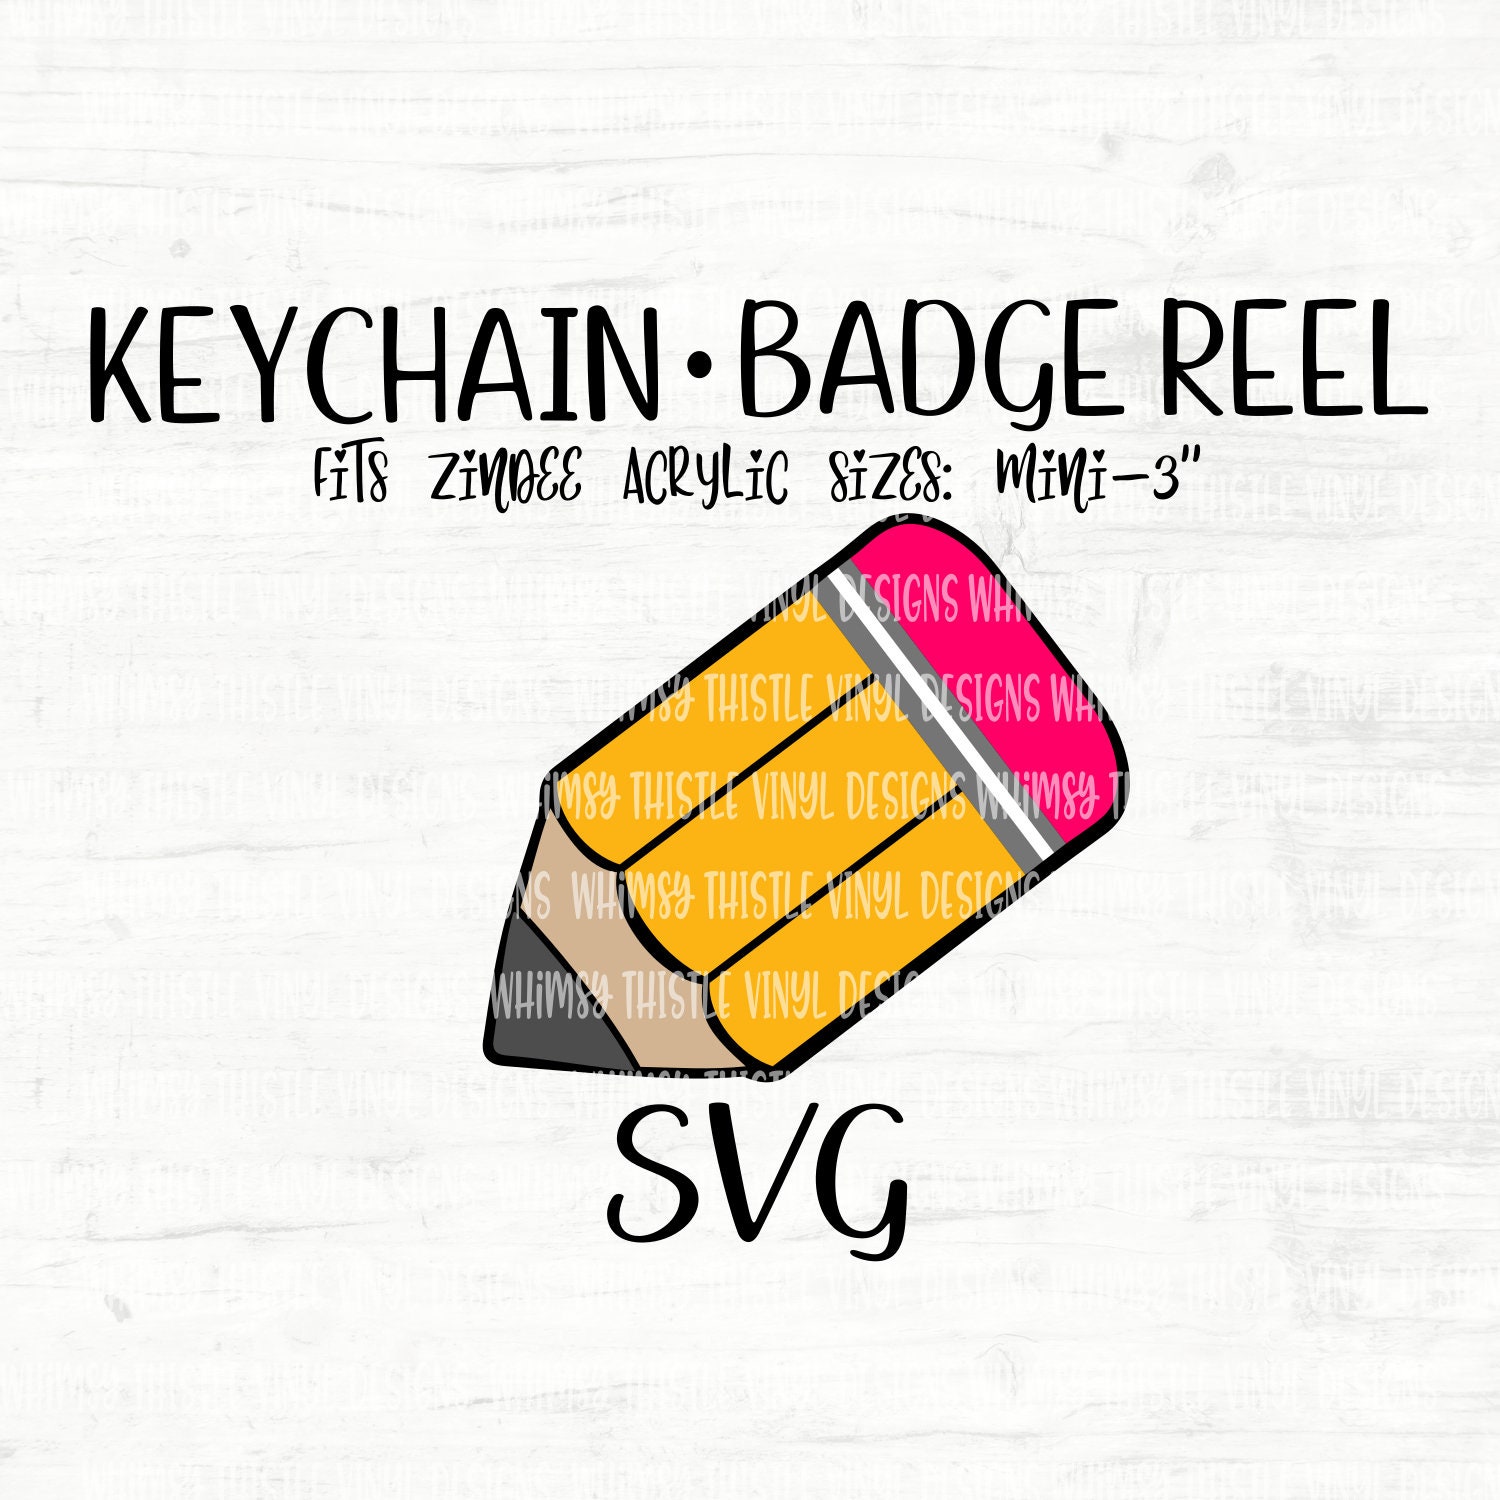 Keychain/Badge Reel SVG Pencil Cut File | Etsy